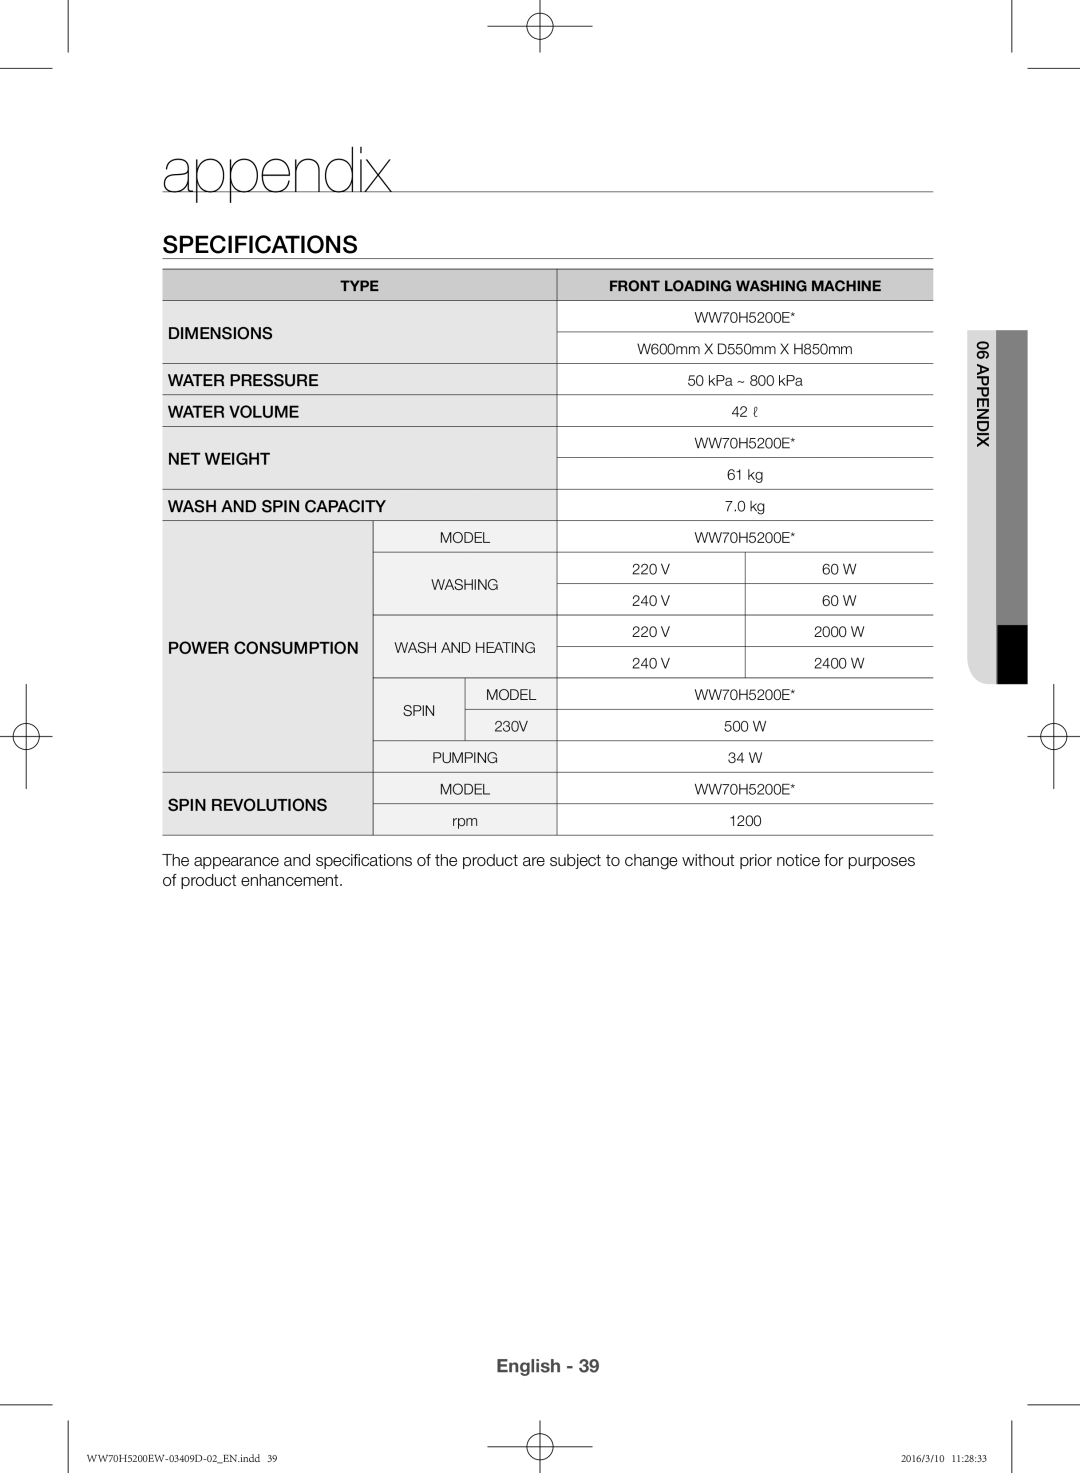 Samsung WW70H5200EW/KJ manual Specifications, Spin Revolutions 